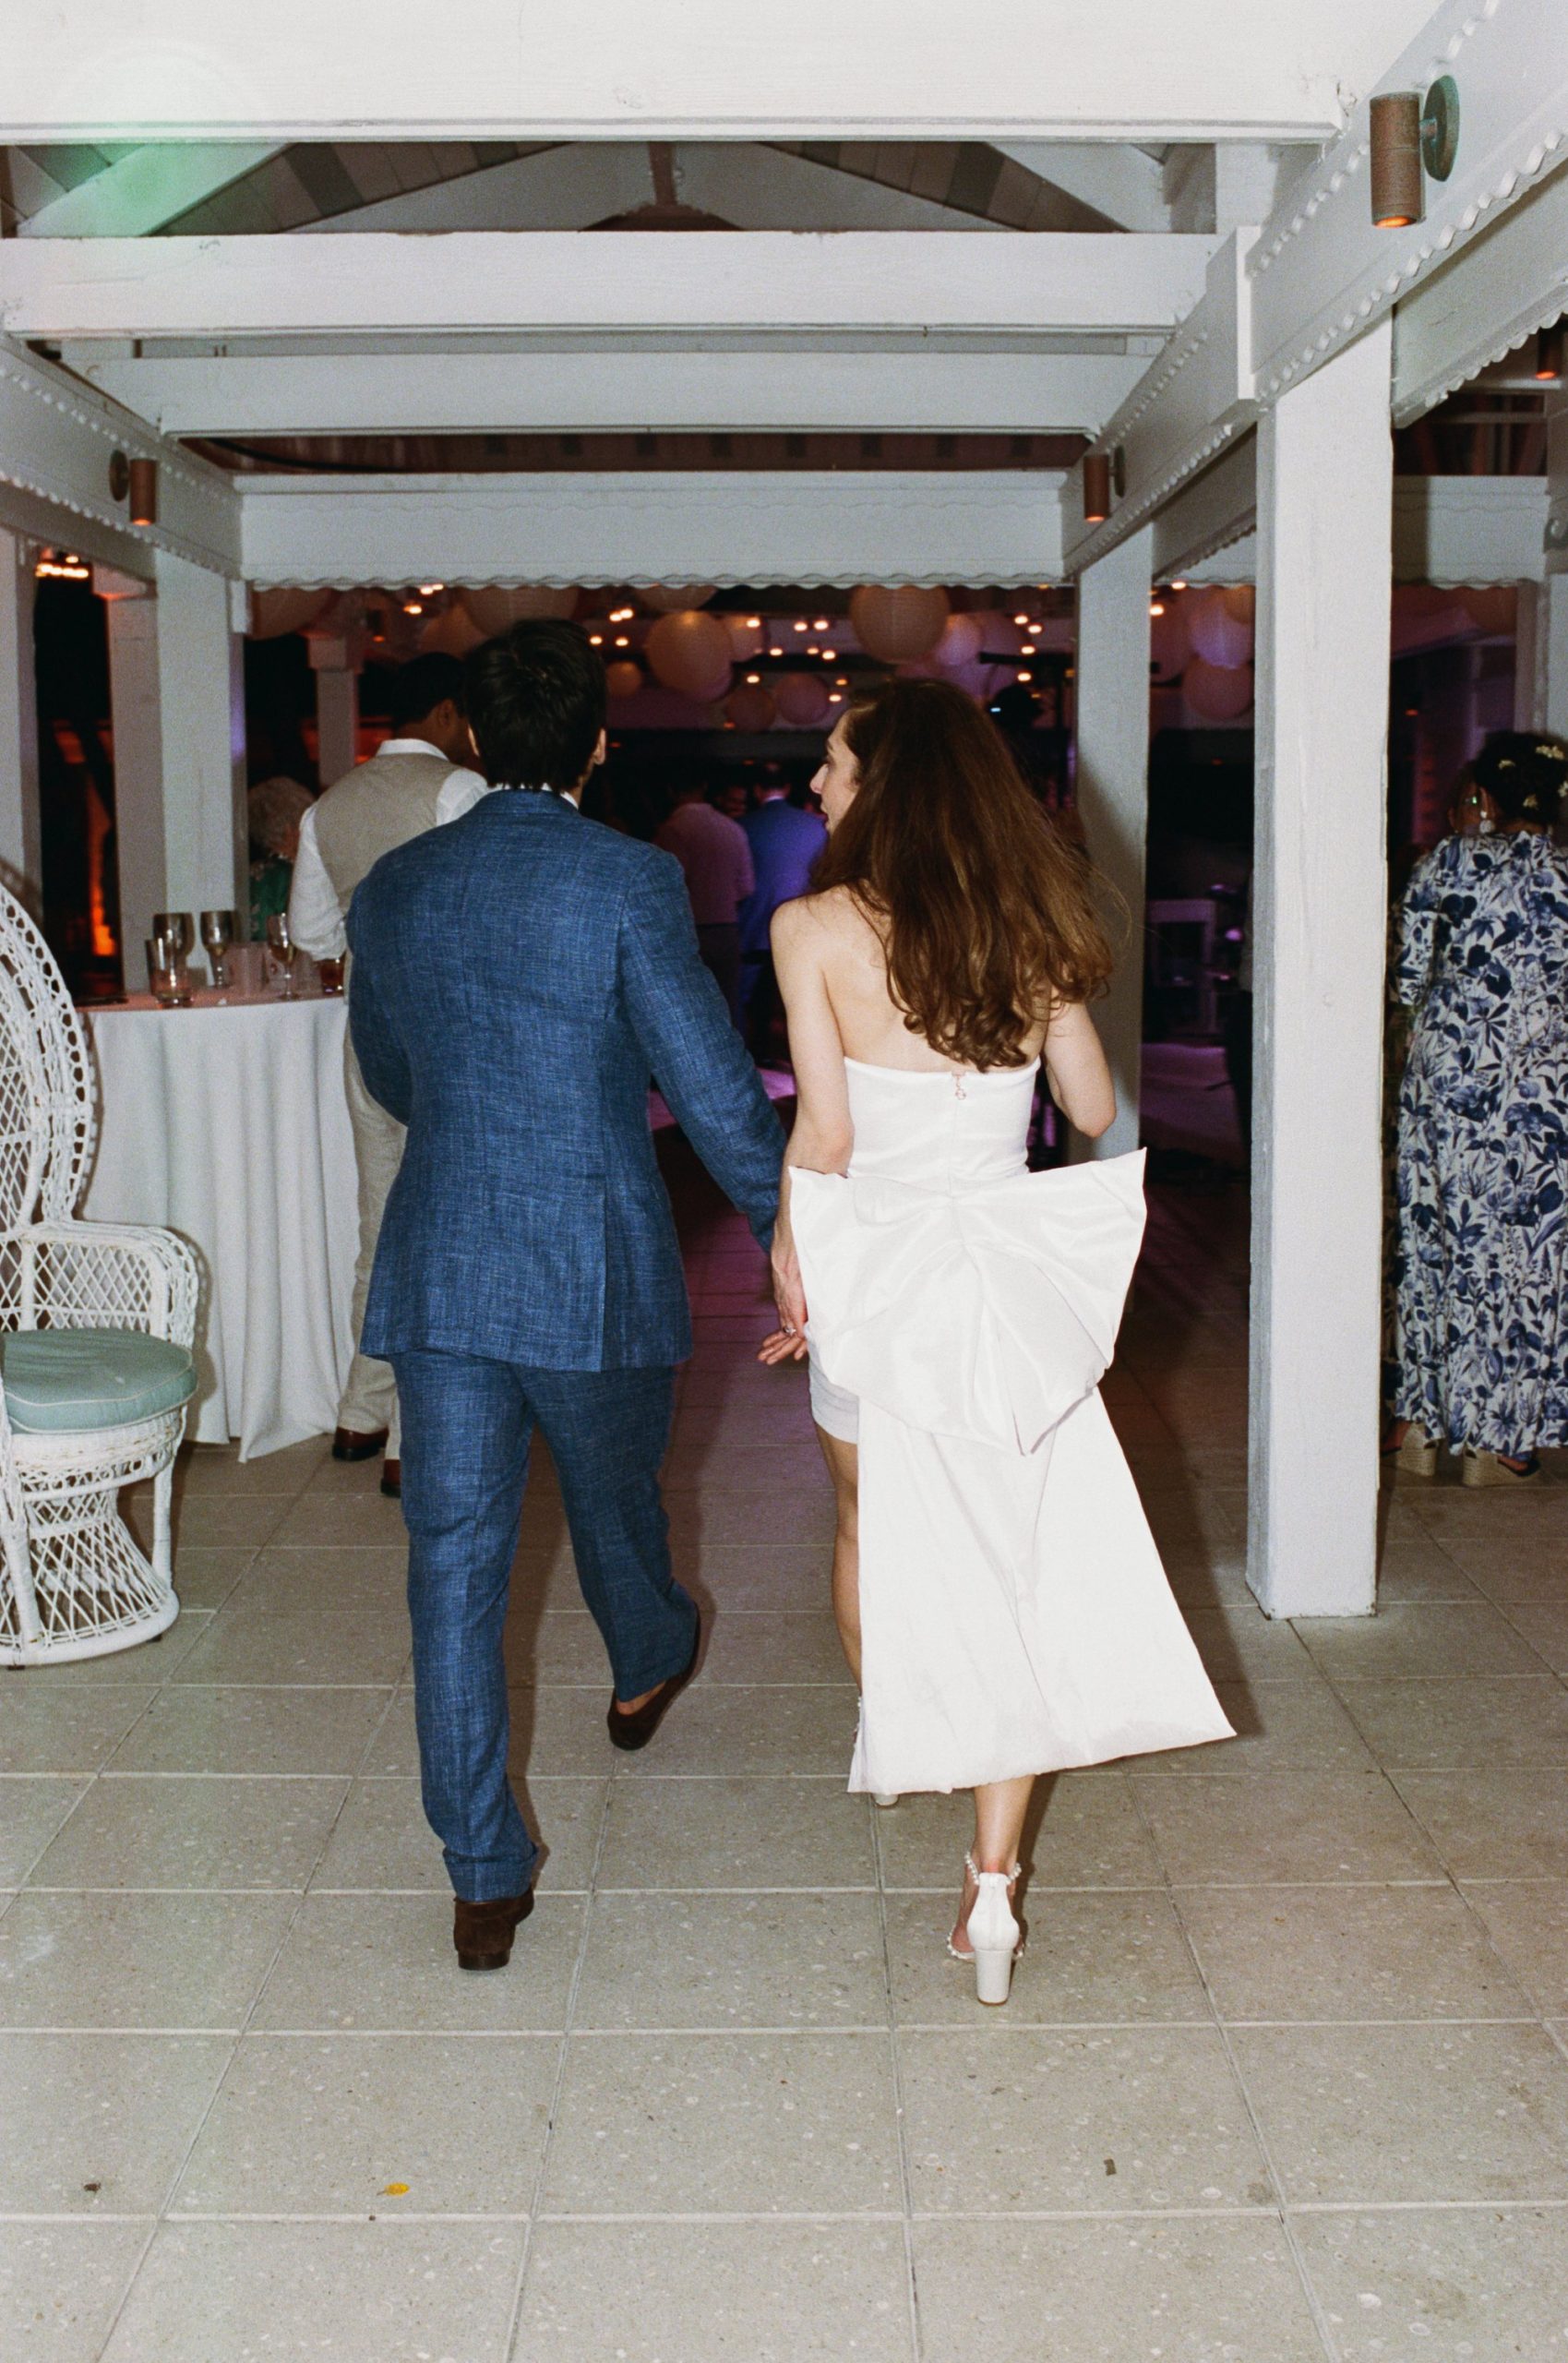 the gasparilla inn and beach club wedding reception photos 